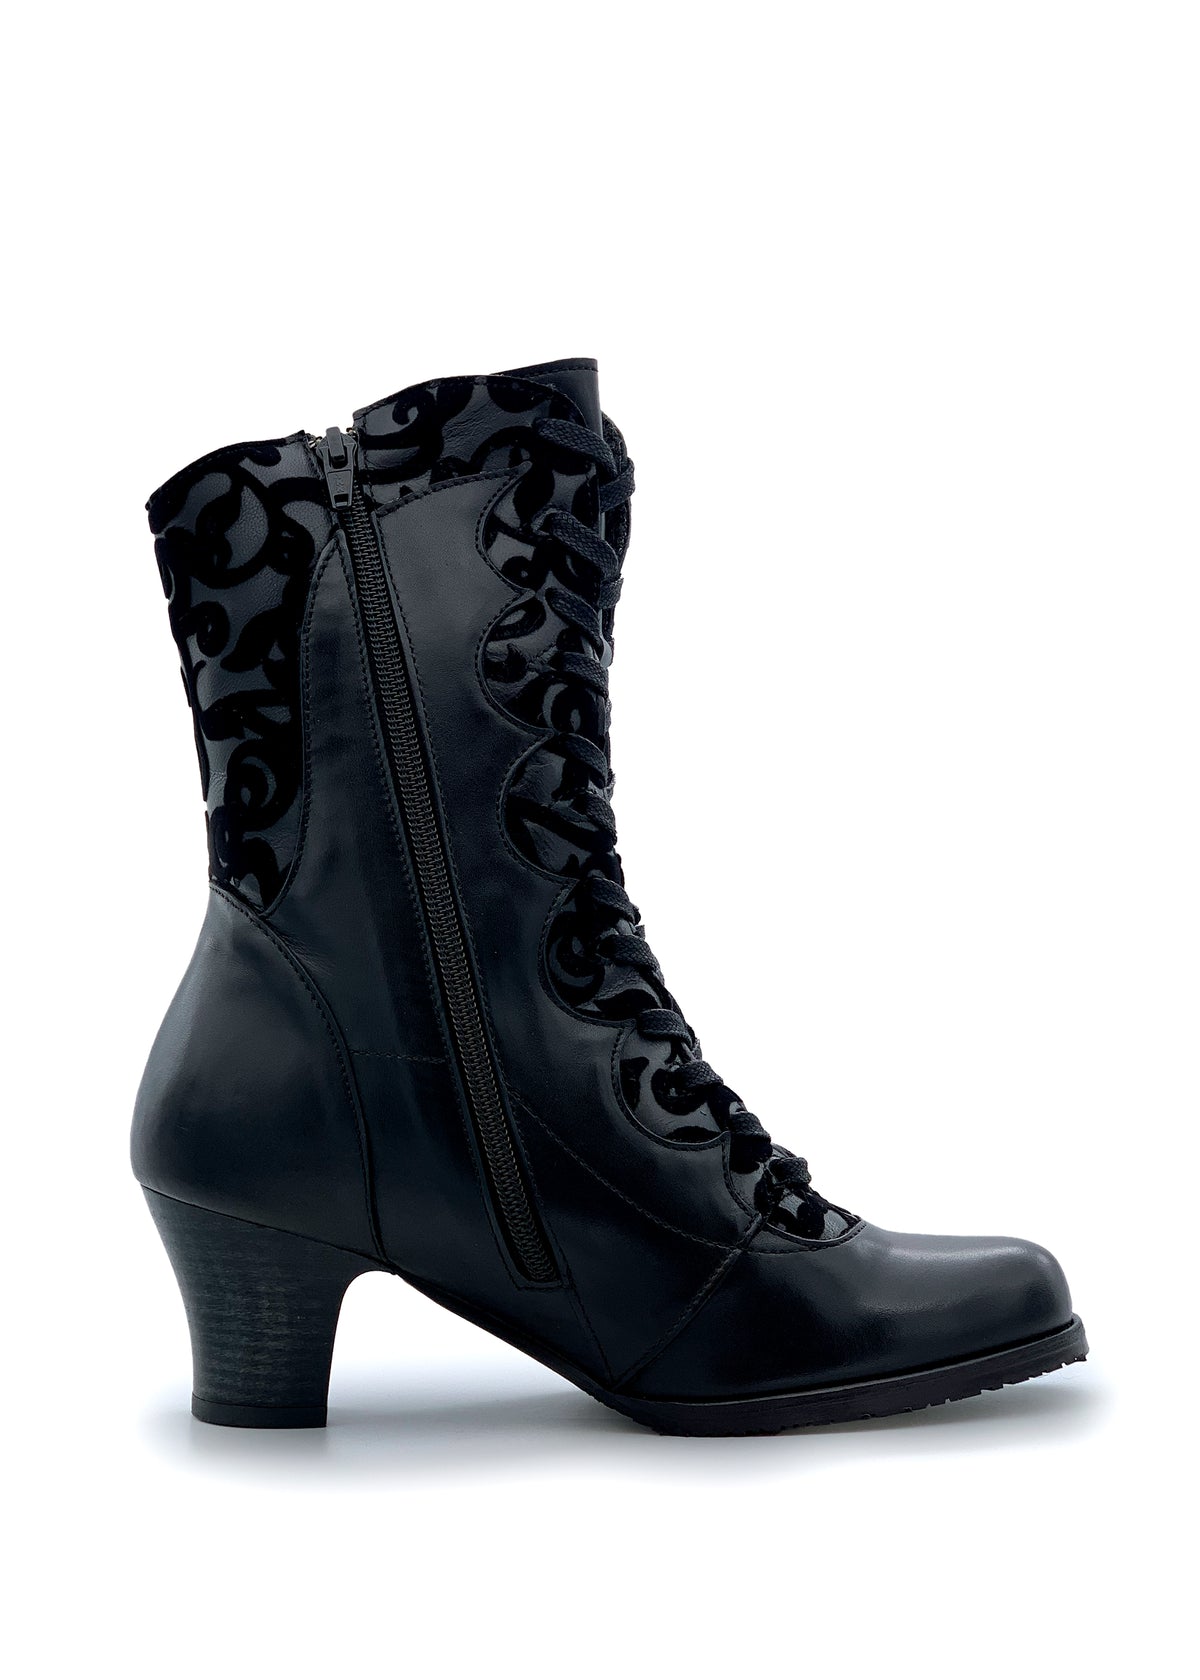 Heeled boots - Fanni, black